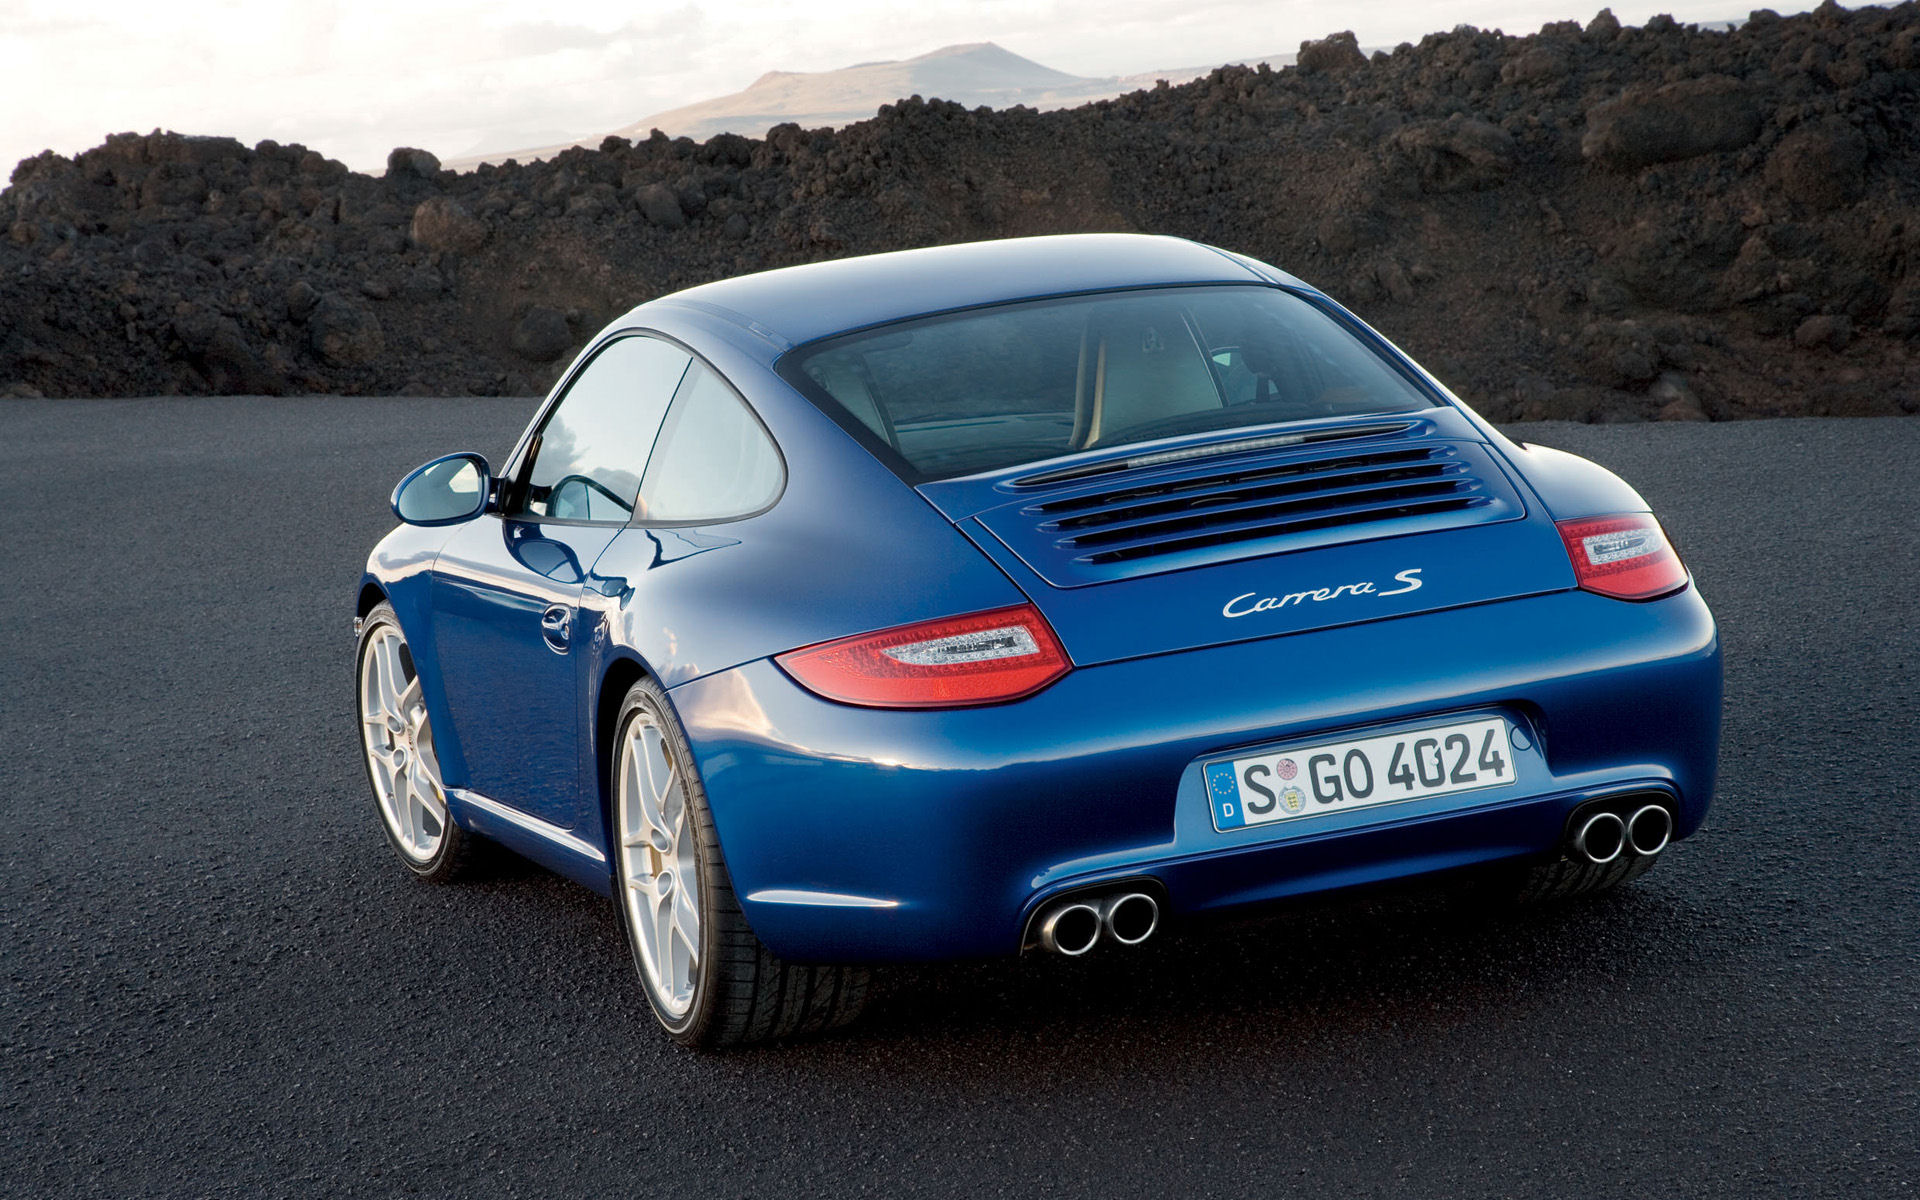 Porsche 911, 996, 997 Carrera S, 4S, GT3, Turbo - Free Widescreen ...